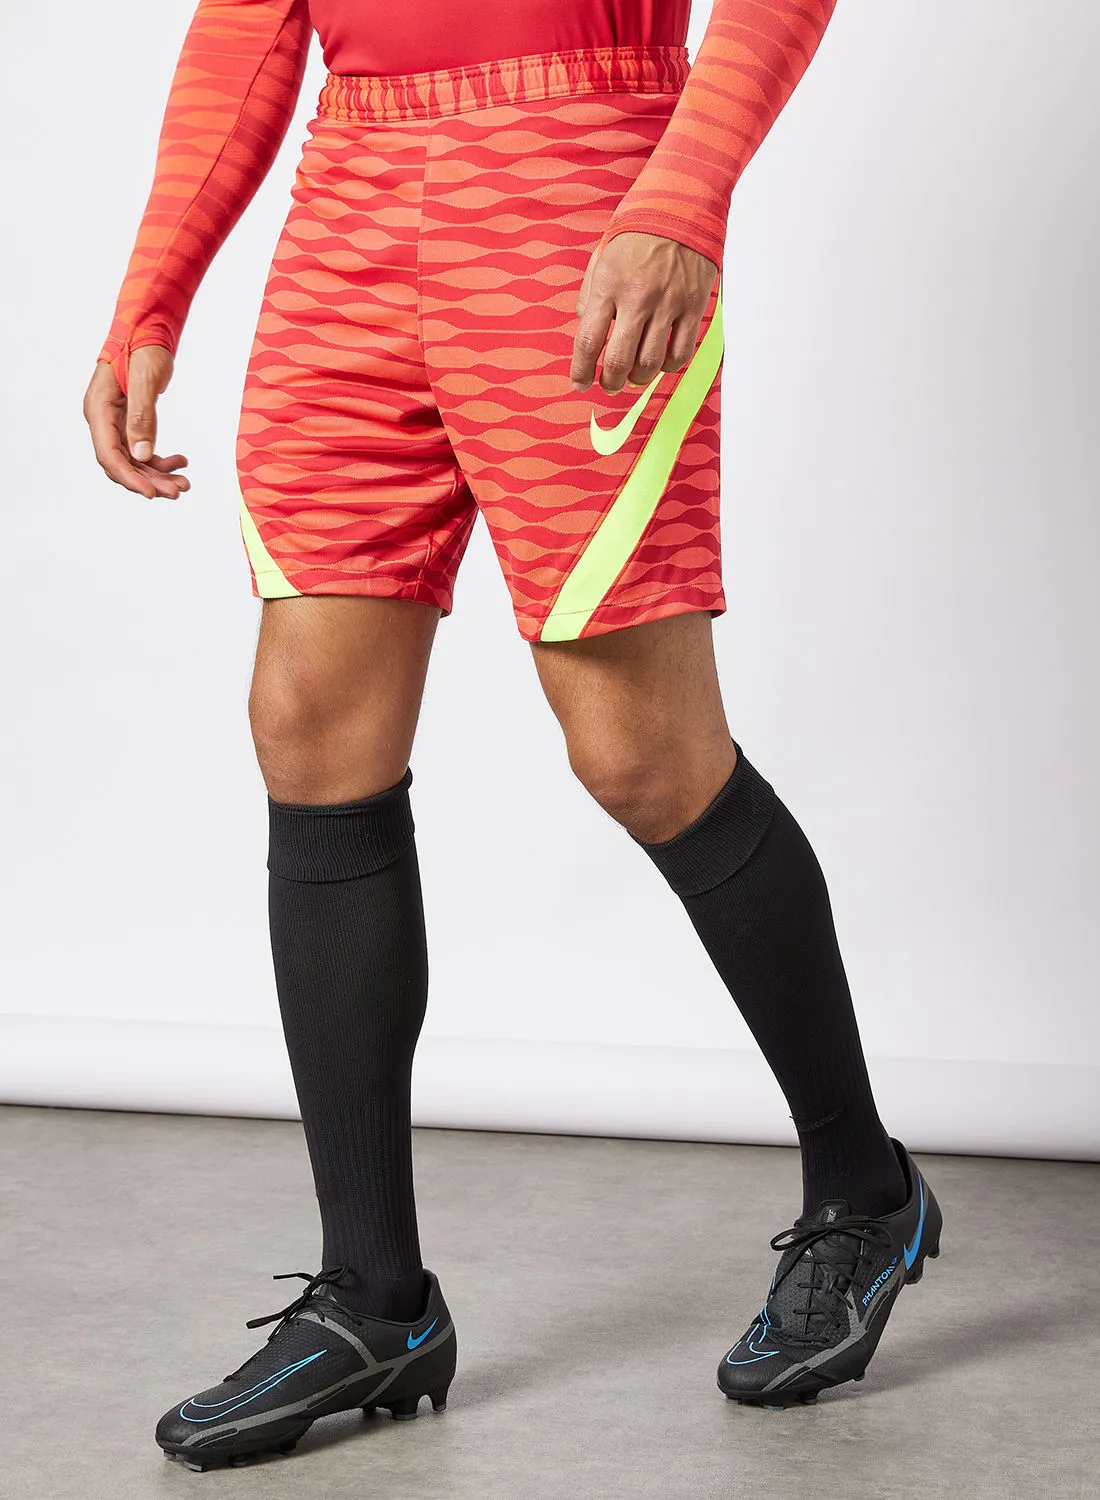 Nike Dri-FIT Football Shorts Red